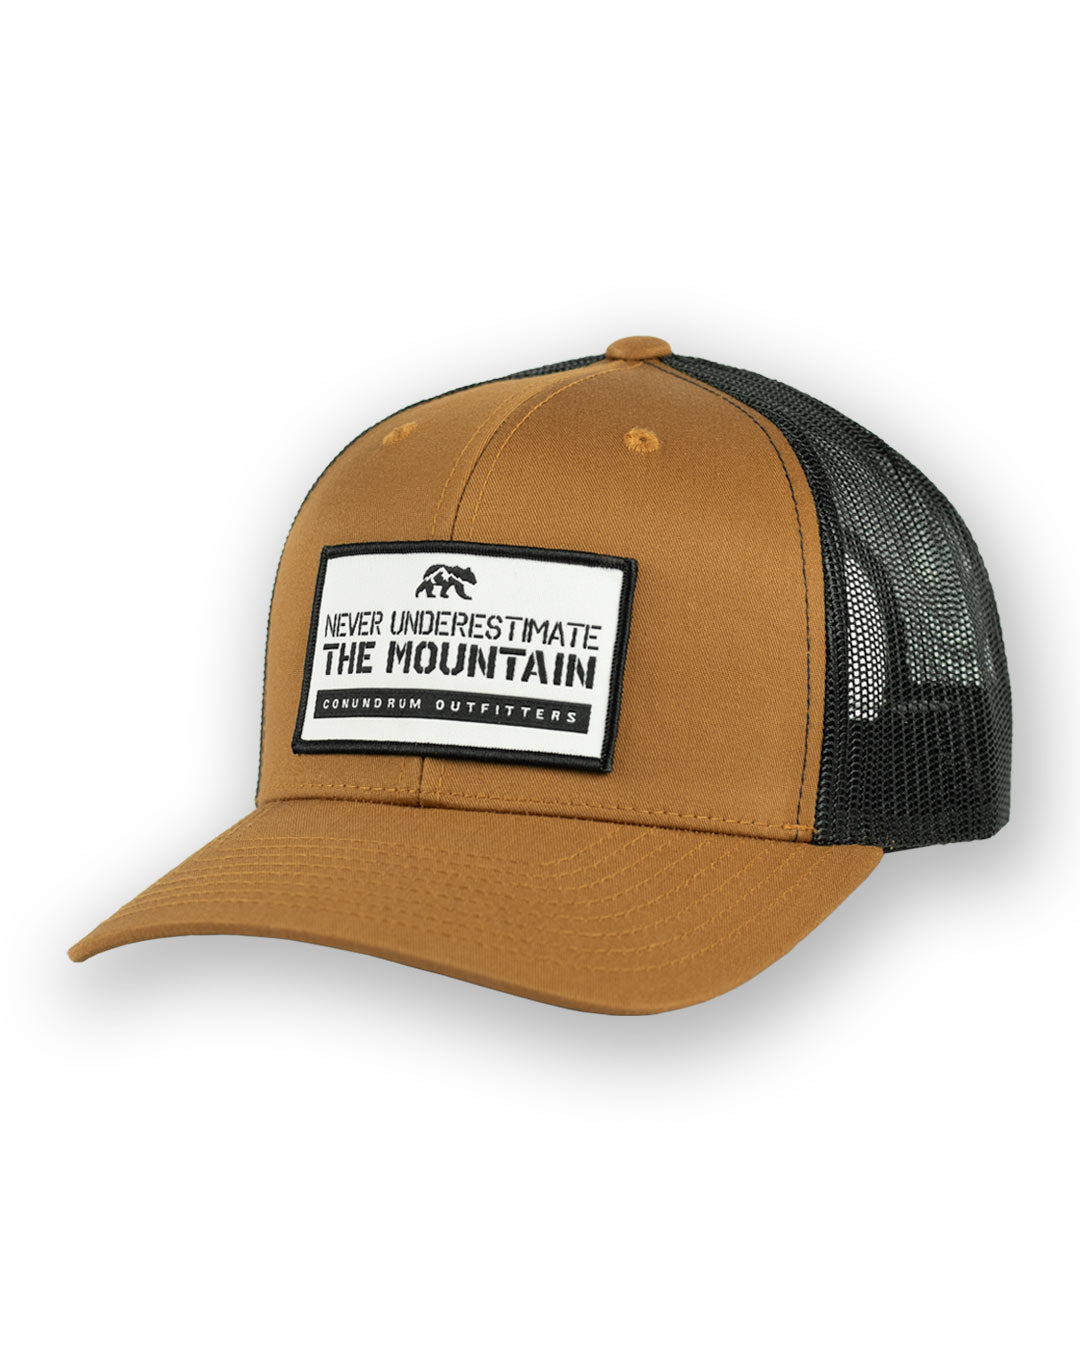 The Mountain Cider Trucker Hat